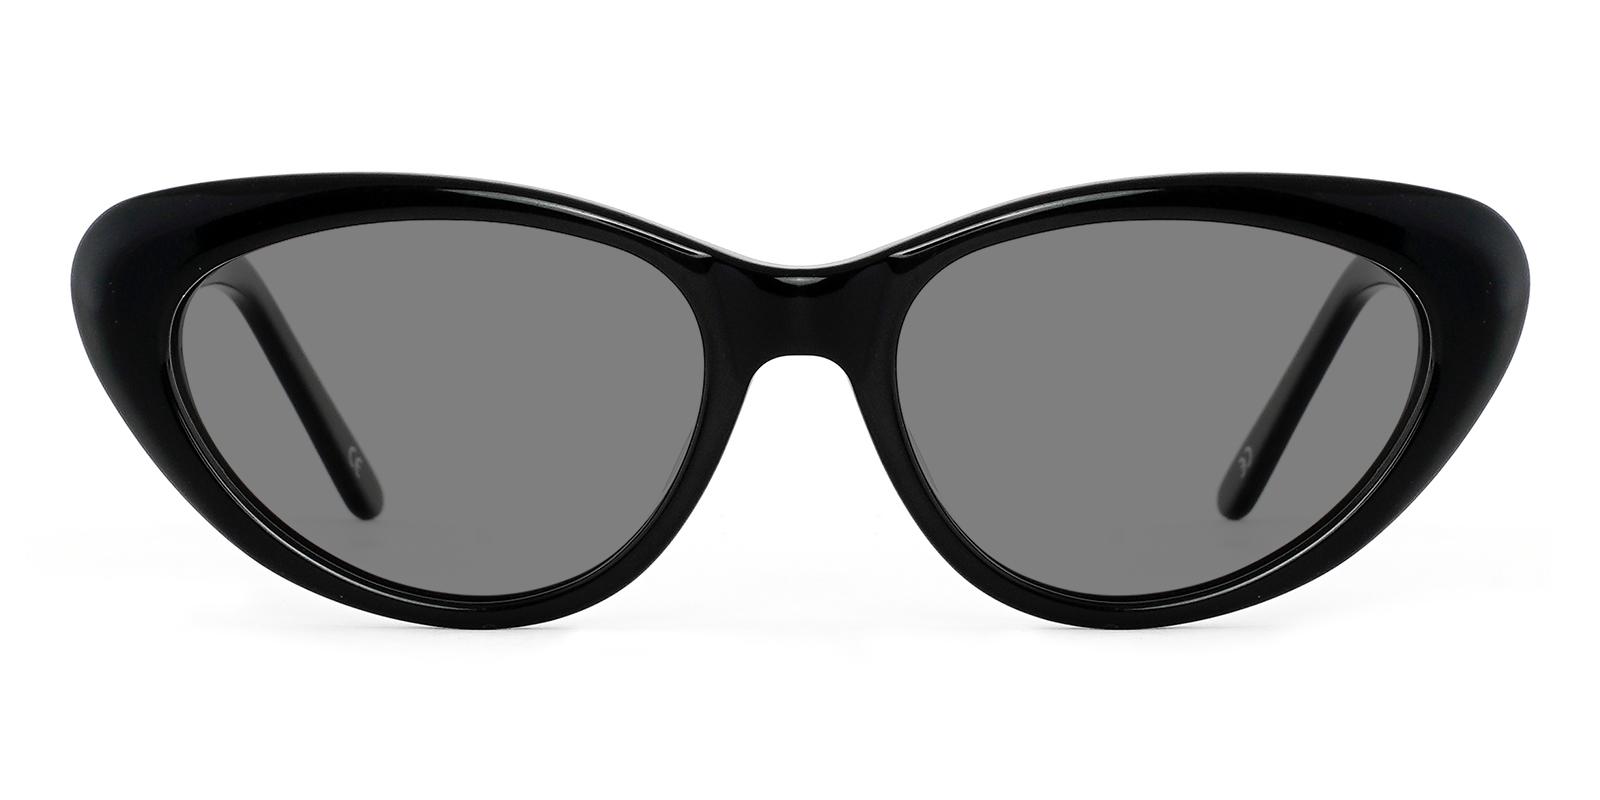 Botanist Black Acetate SpringHinges , Sunglasses , UniversalBridgeFit Frames from ABBE Glasses